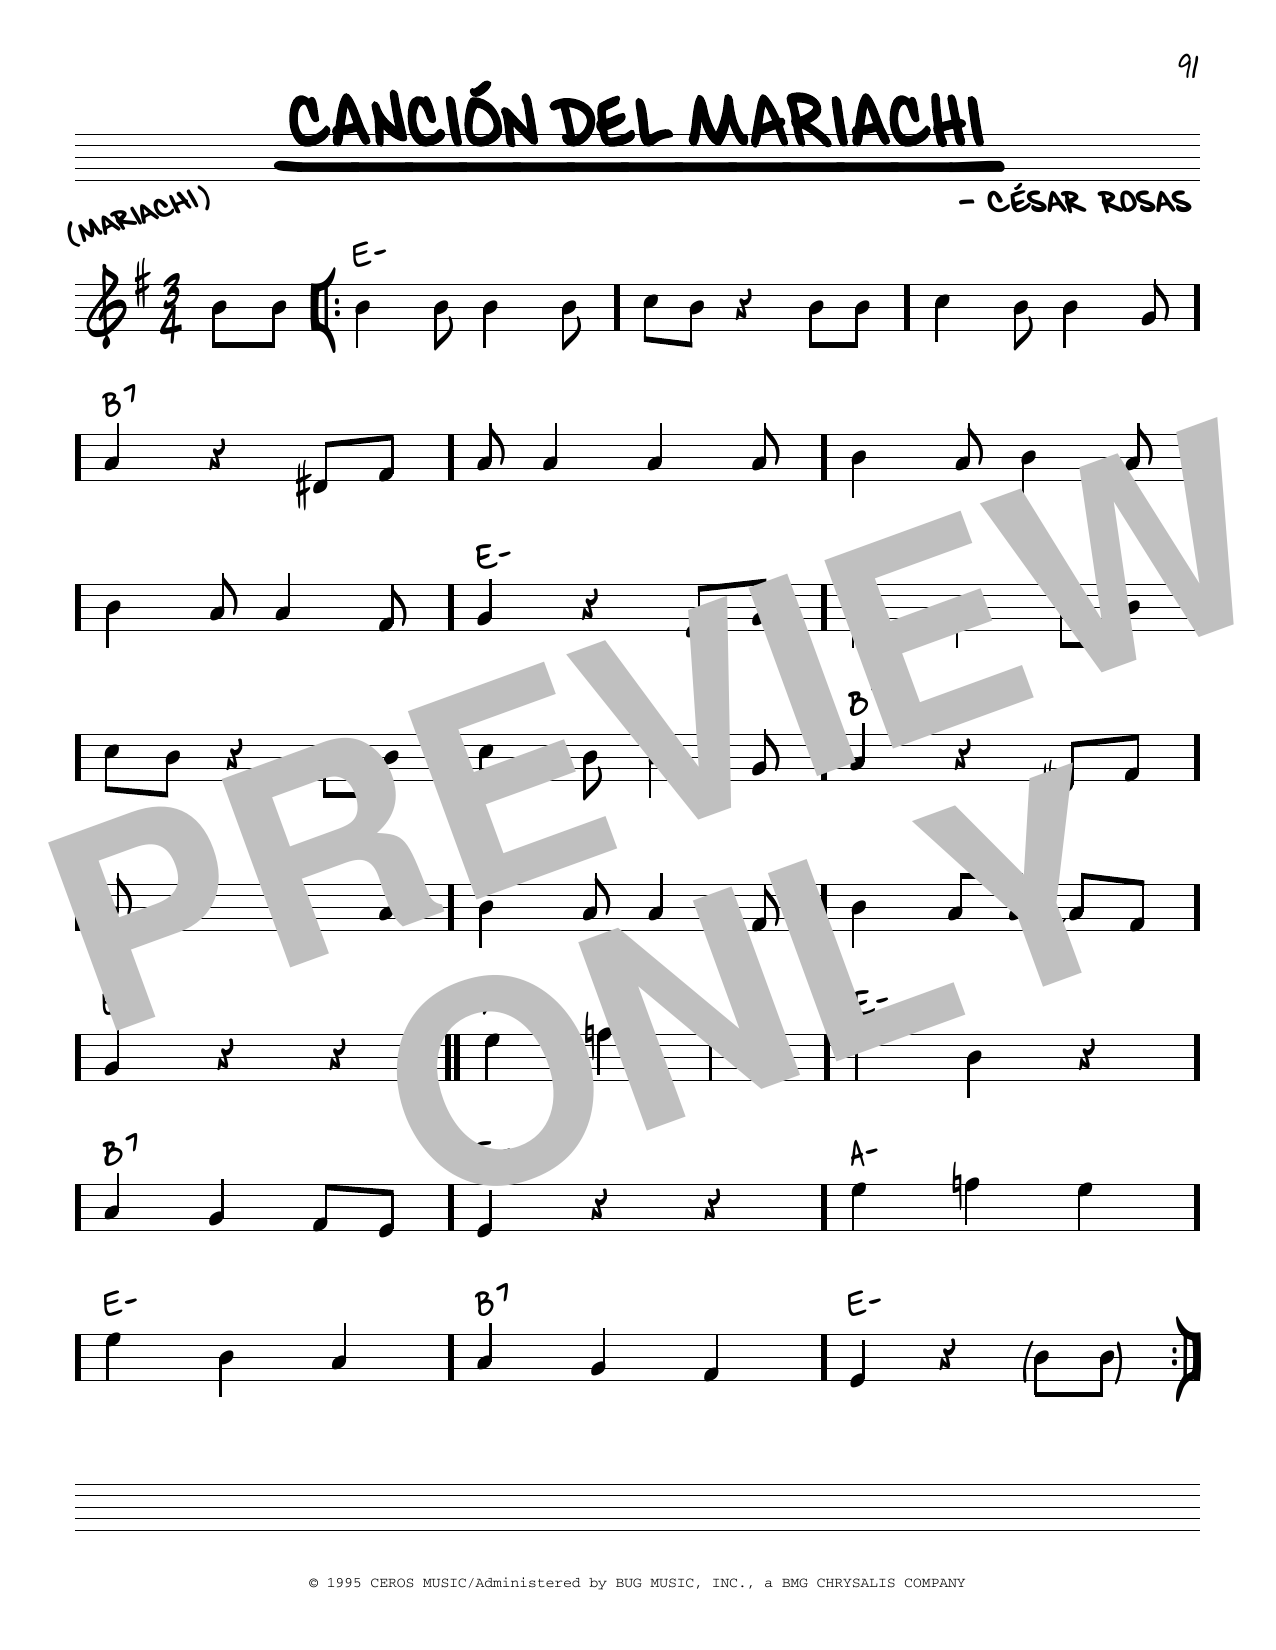 Cesar Rosas Cancion Del Mariachi Sheet Music Notes & Chords for Real Book – Melody & Chords - Download or Print PDF